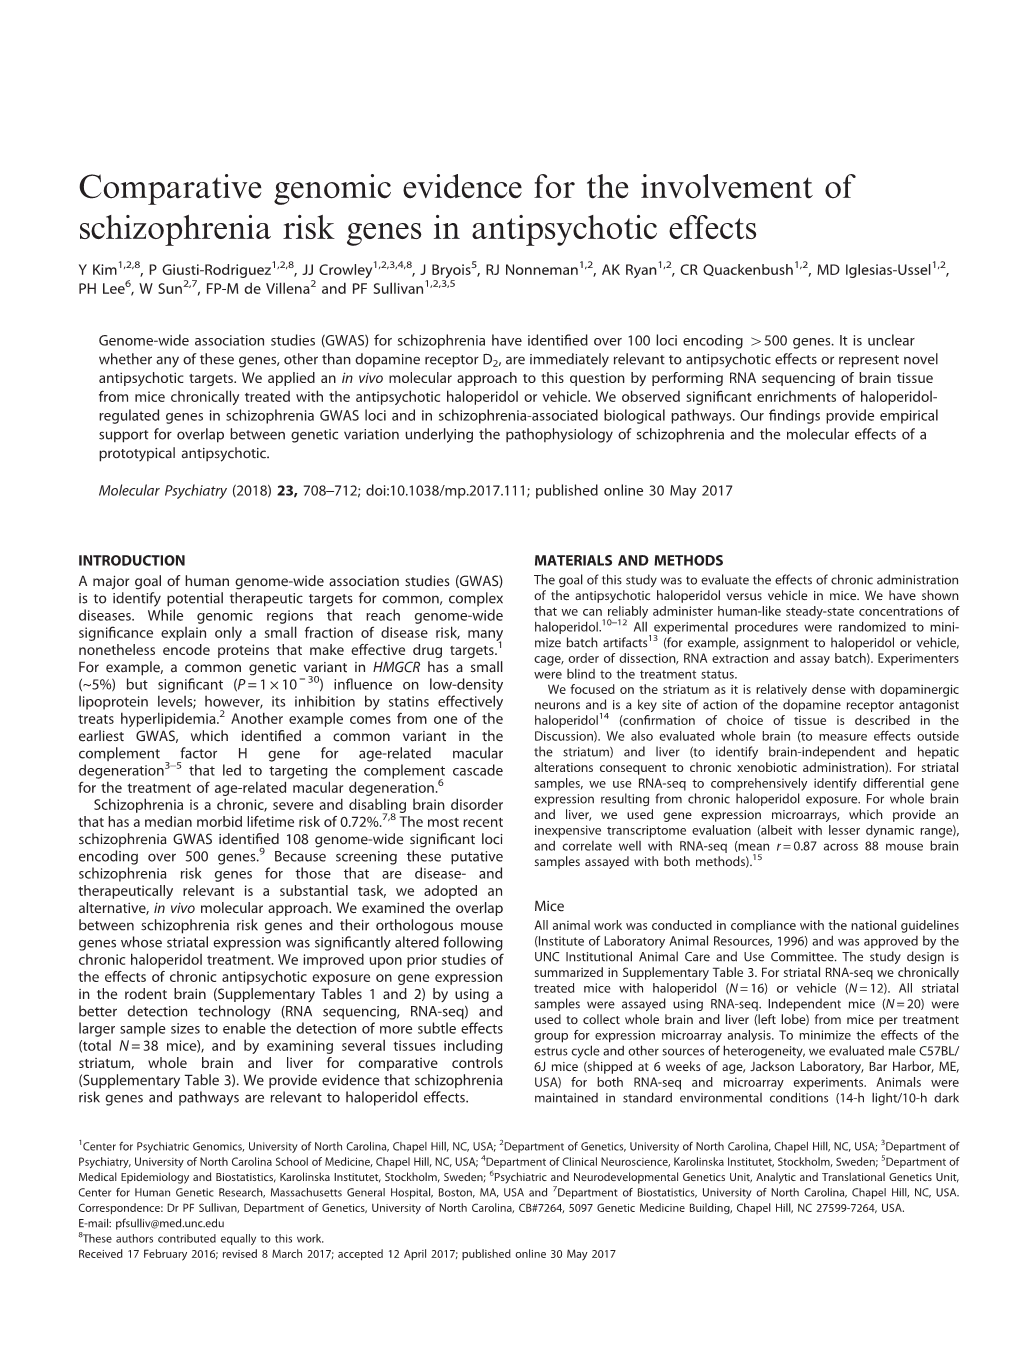 Comparative Genomic Evidence for the Involvement of Schizophrenia